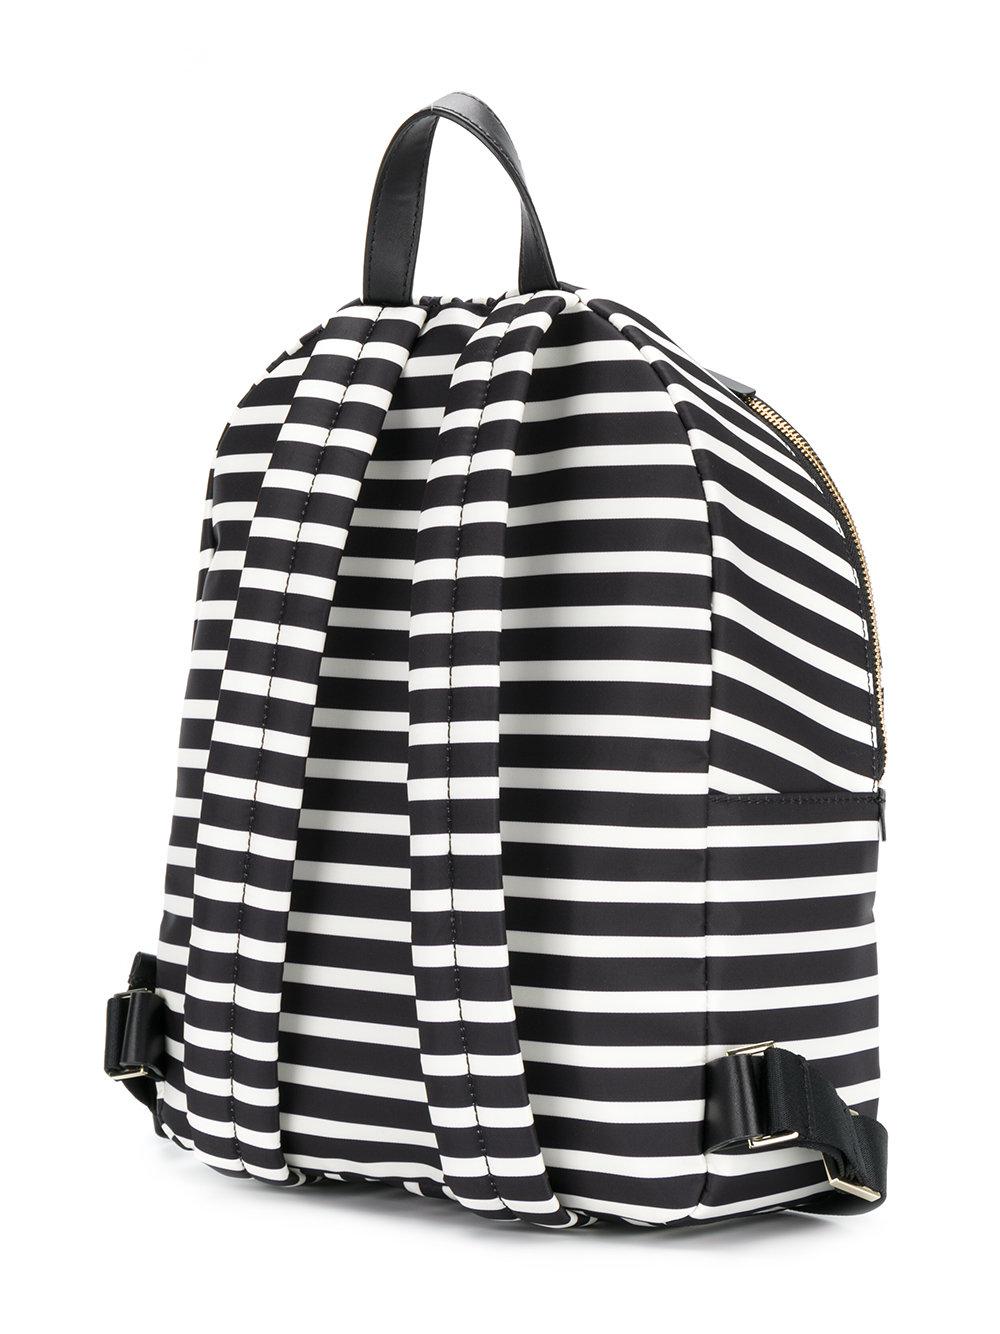 Kate Spade Striped Backpack in Black - Lyst